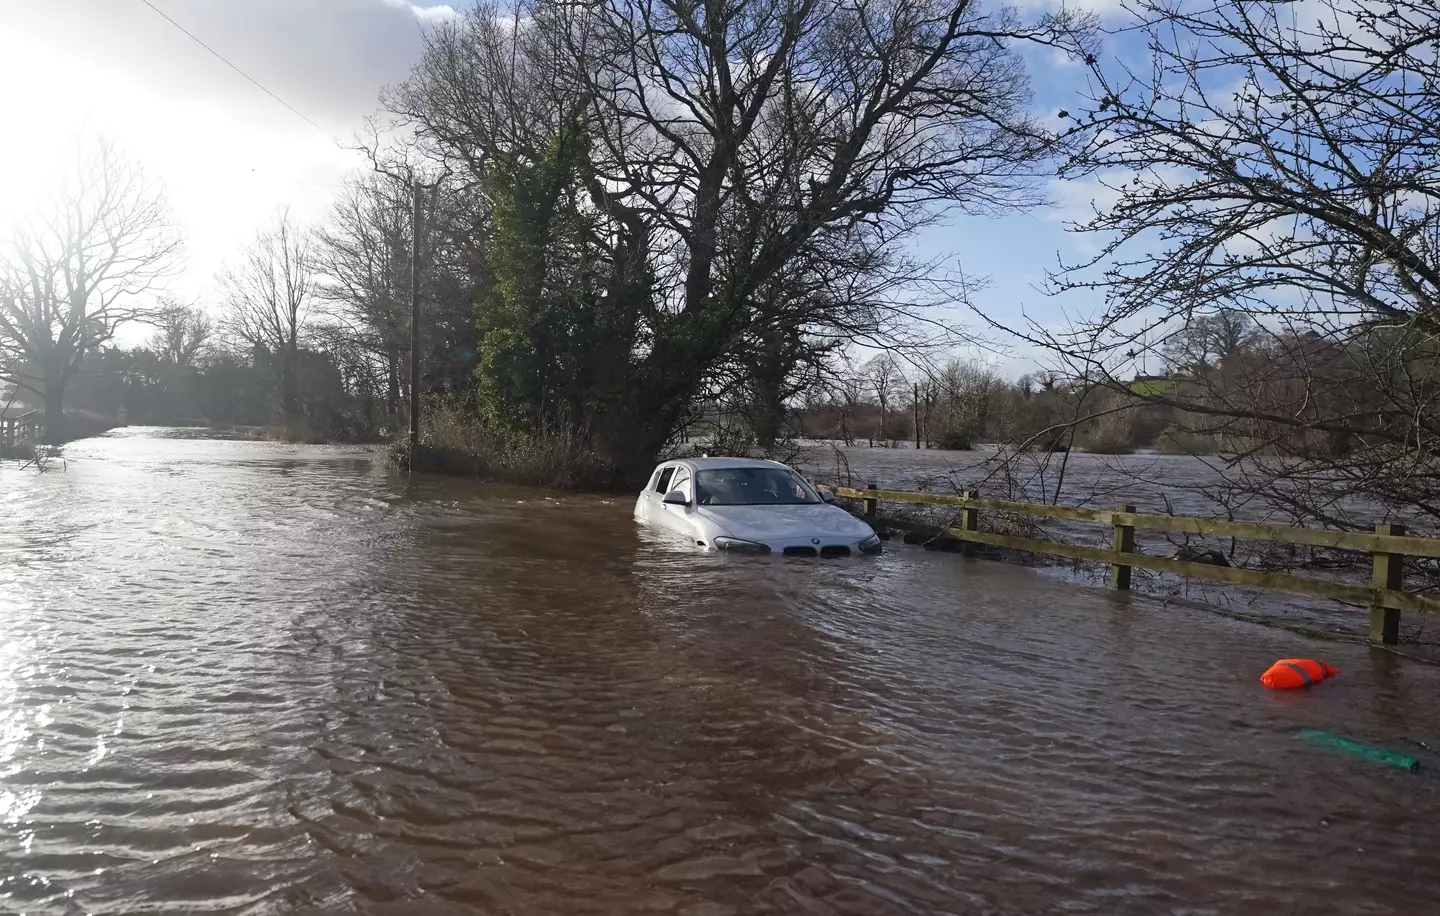 A car stranded in flood water in Warwick bridge in Cumbria.